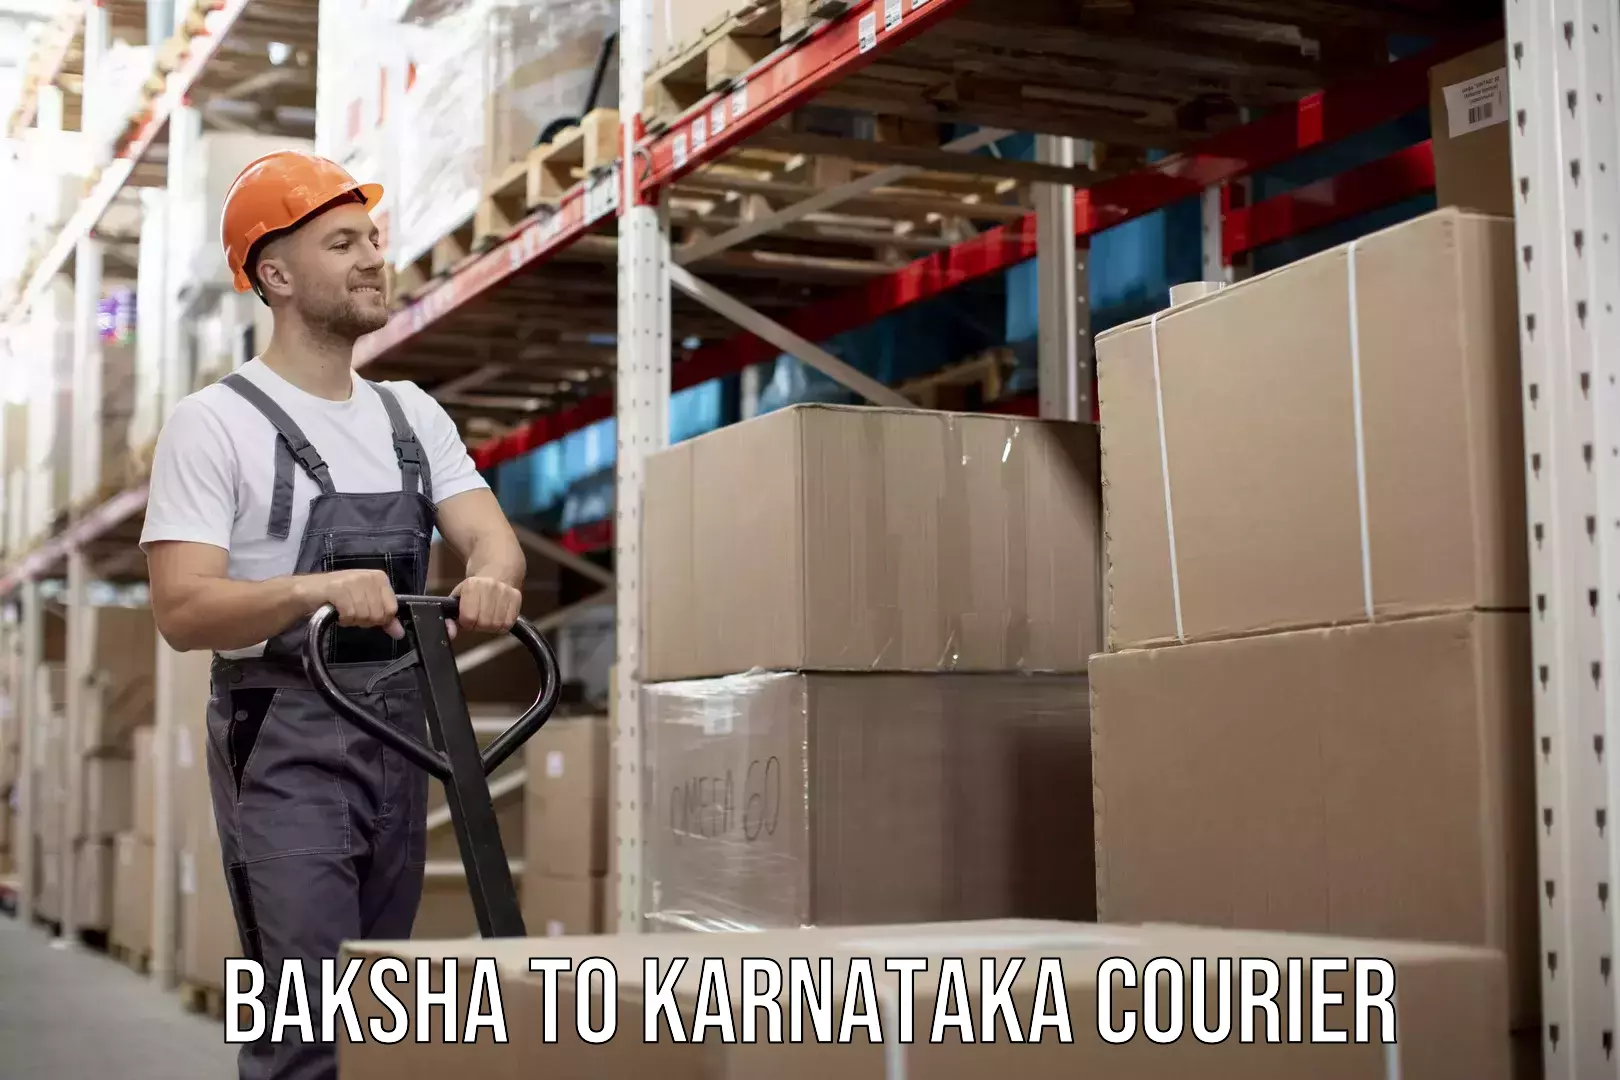 Rural area delivery Baksha to Karnataka